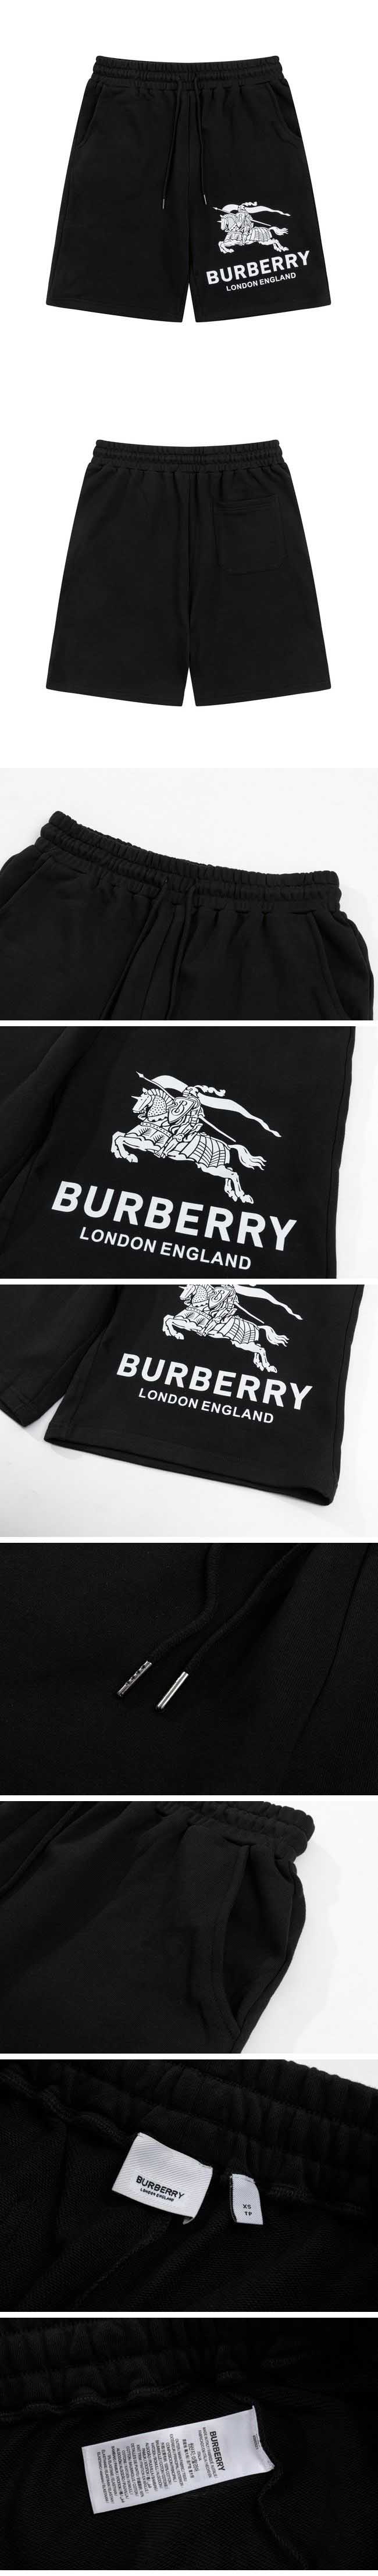 Burberry Equestrian Knight Logo Sweat Shorts バーバリー エスクリアンナイト ロゴ スウェット ハーフパンツ